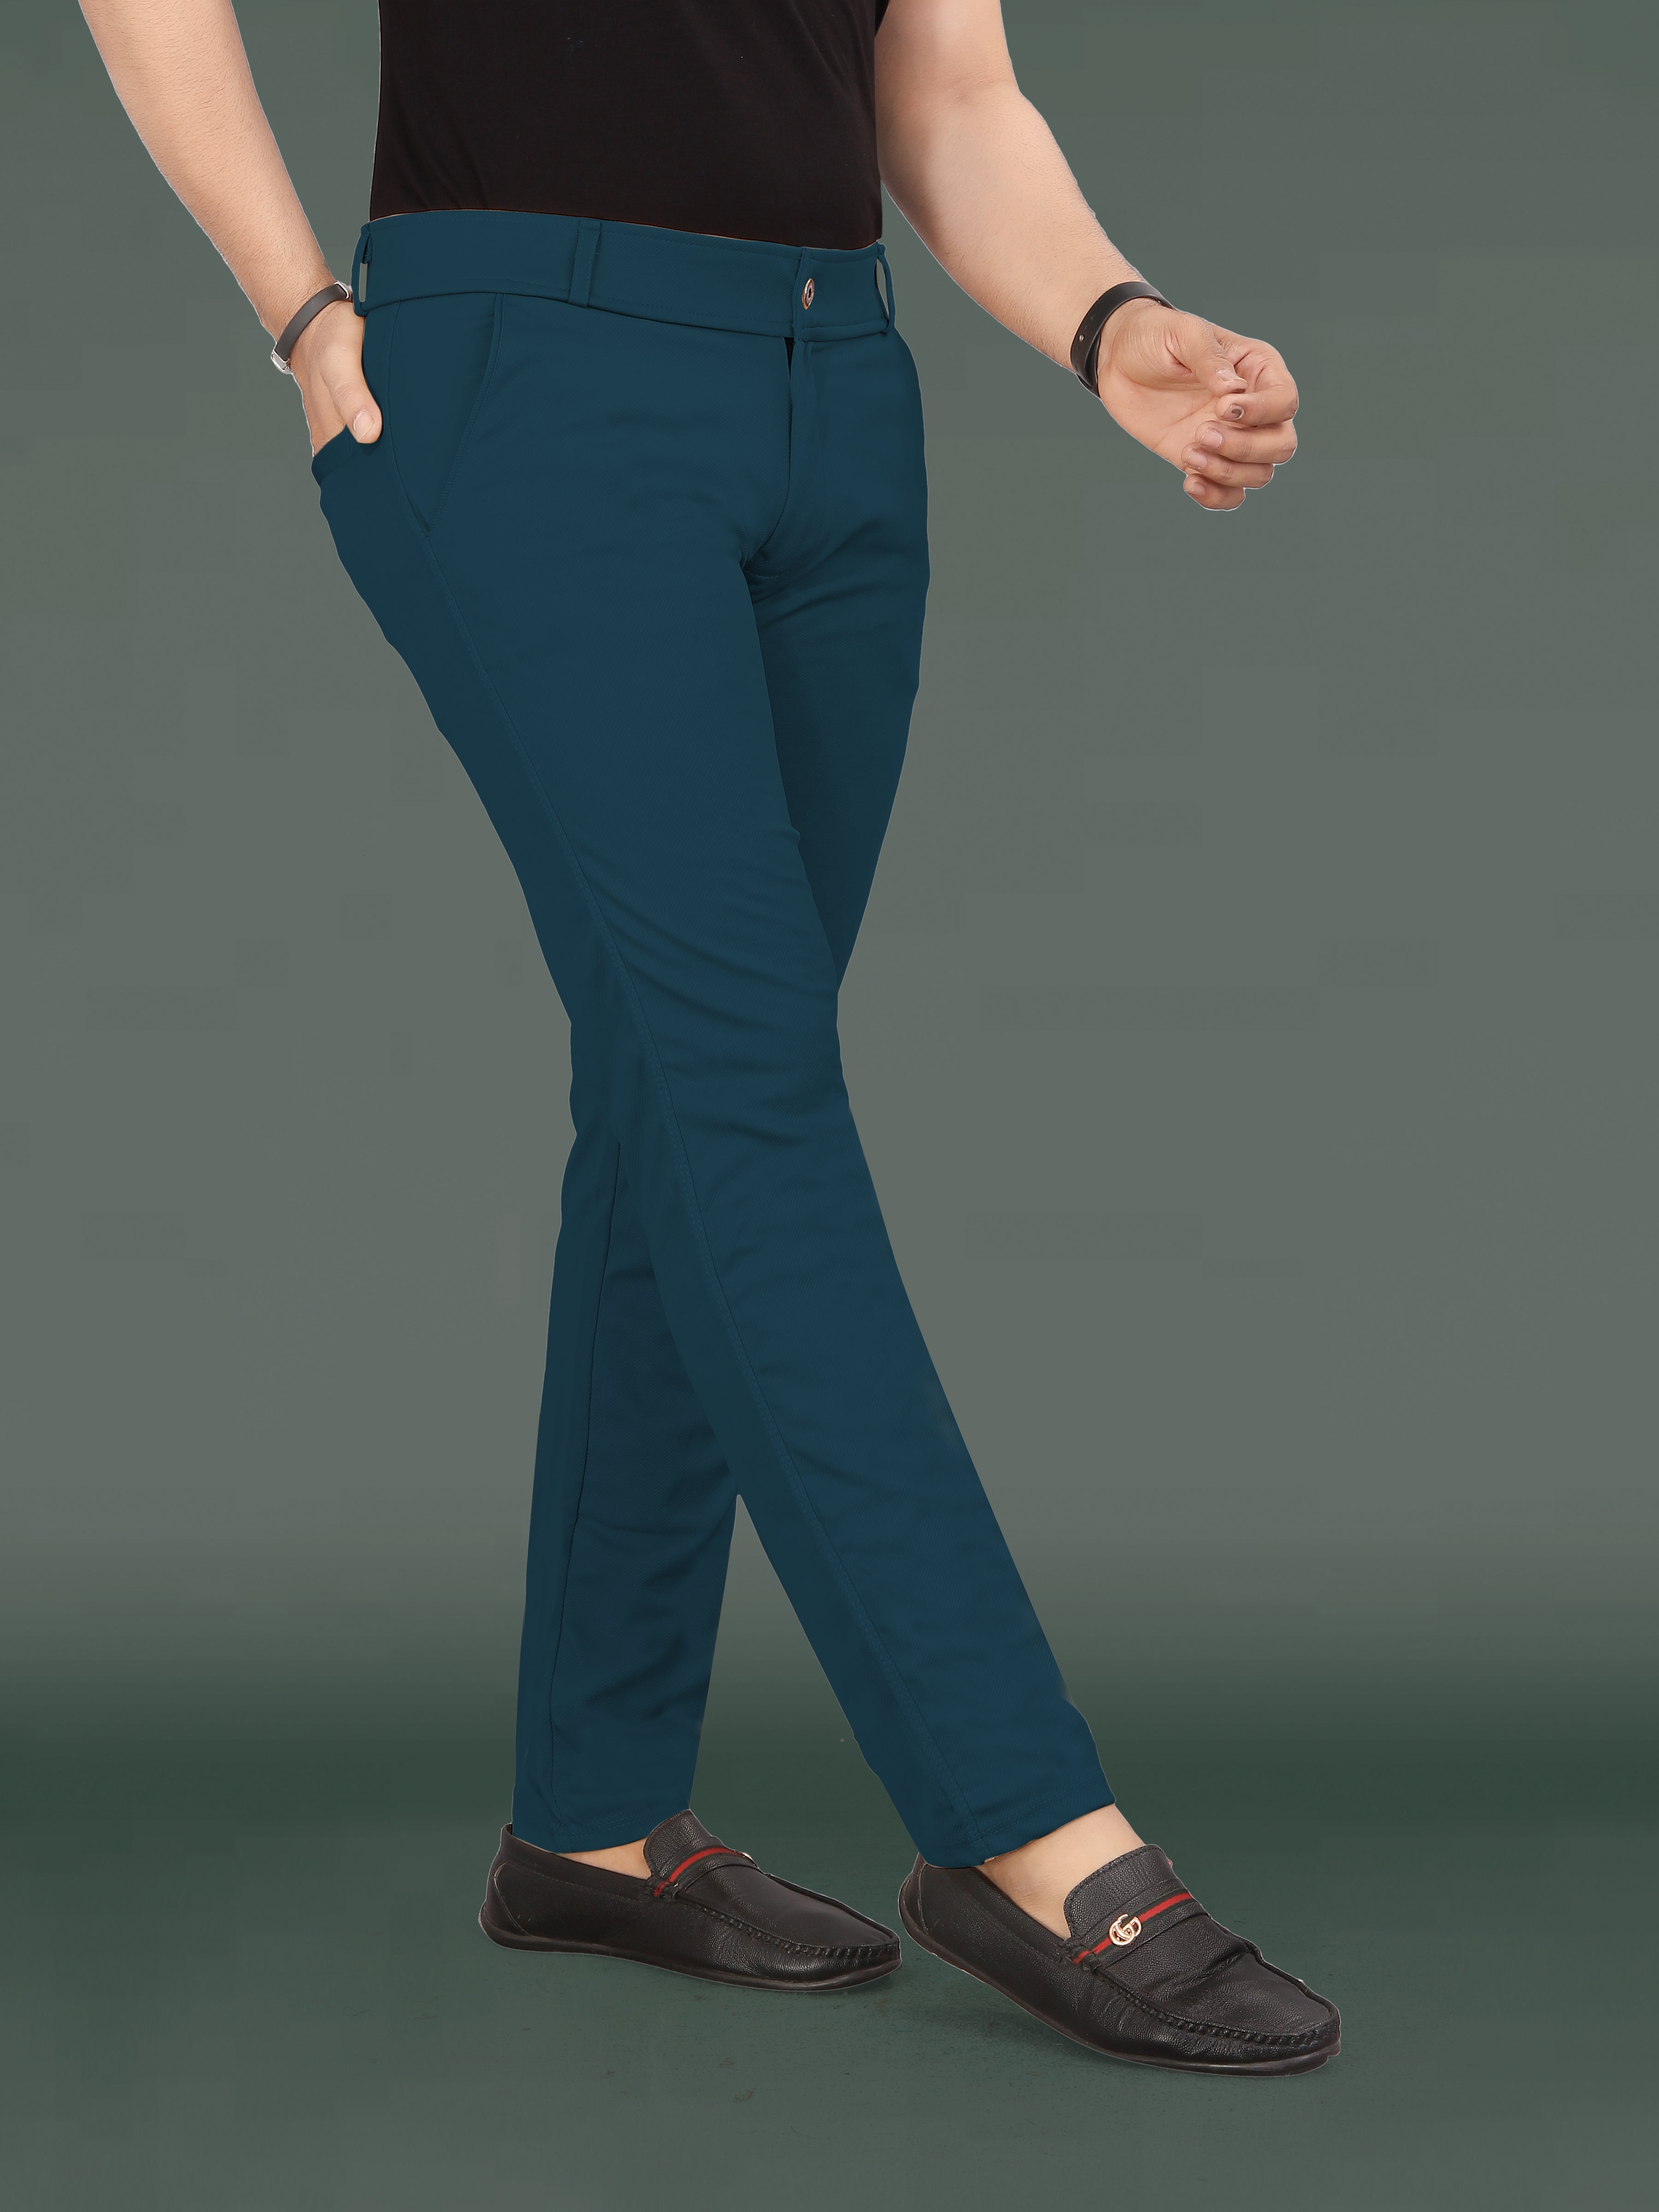 Ritsila Slim Fit Stretchable Lycra Trouser For Men { Pack Of 2 }